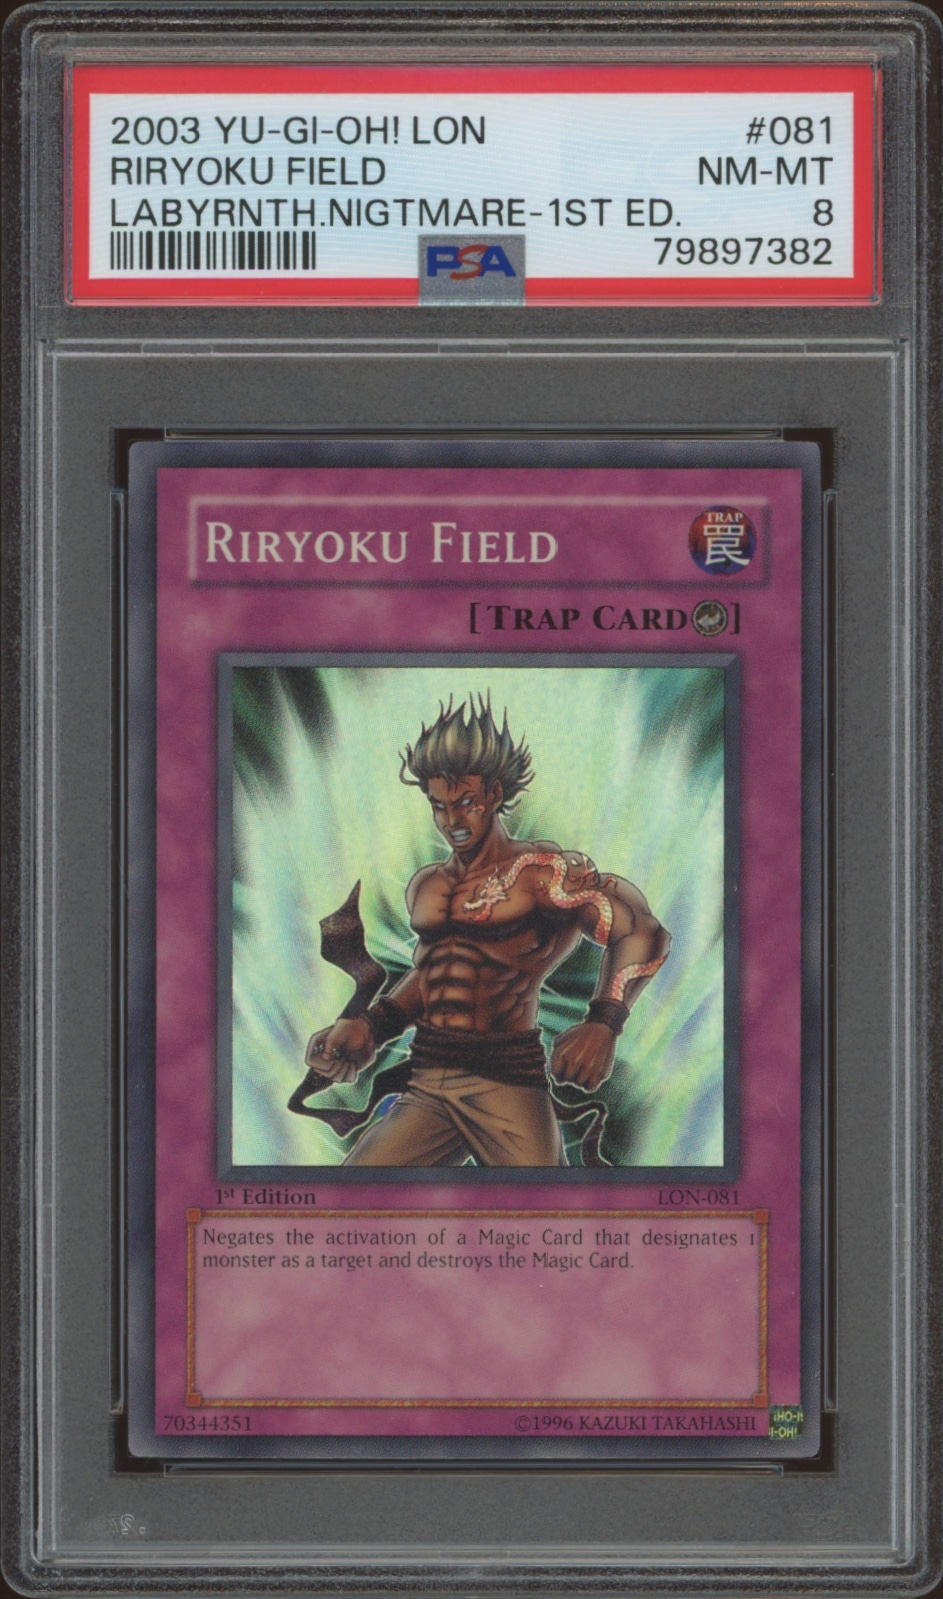 PSA-graded Riryoku Field Yu-Gi-Oh! Trap Card from 2003 Labyrinth of Nightmare set.